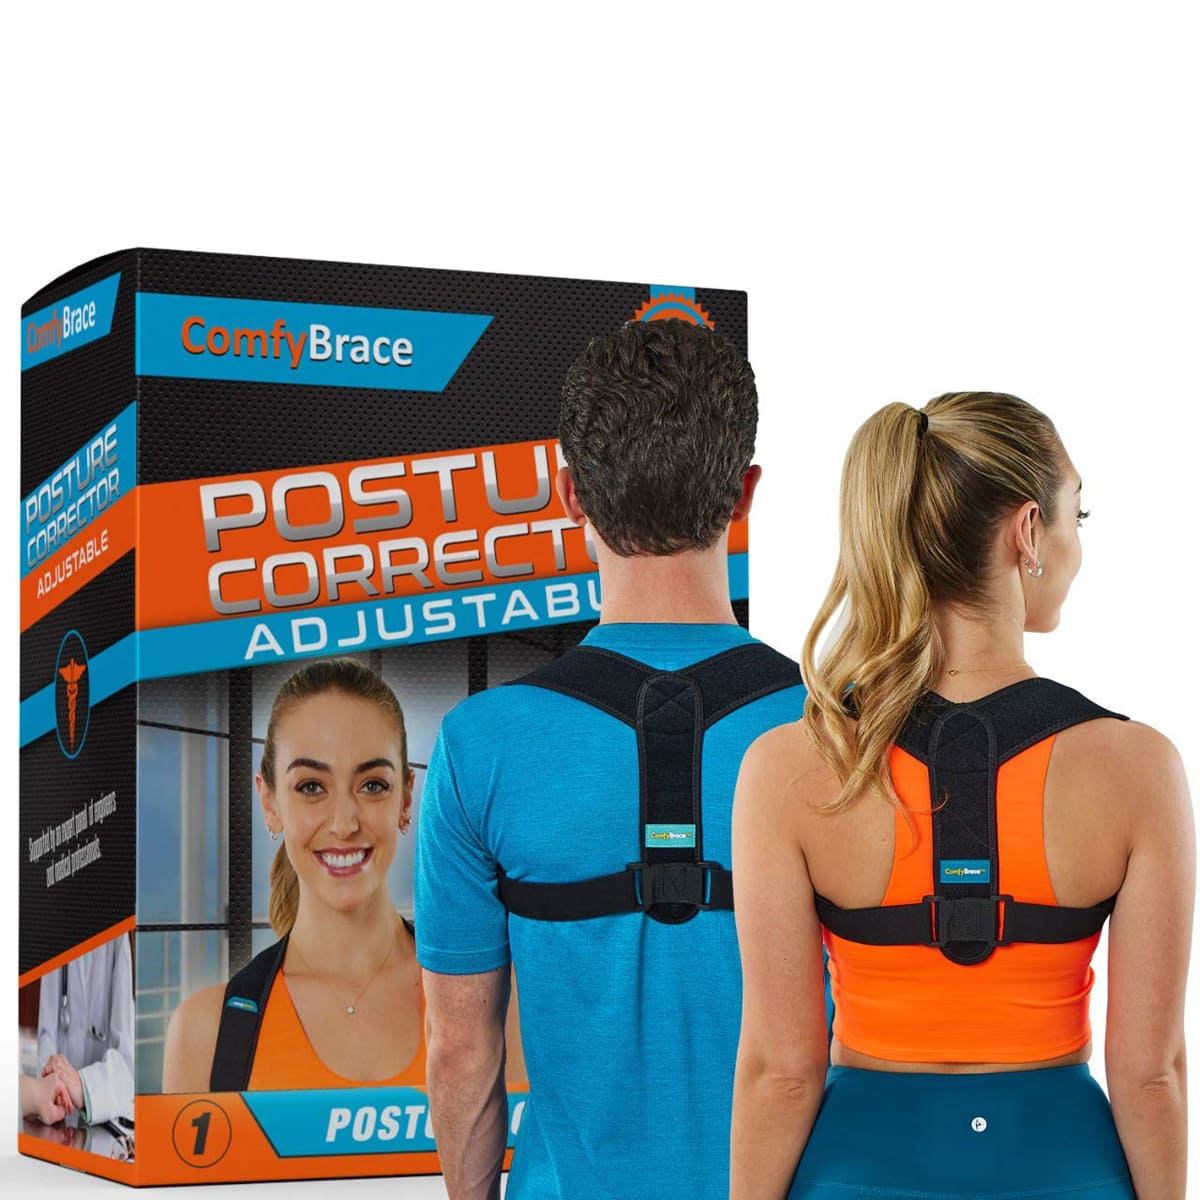  Back Brace Posture Corrector For Women only, Adjustable Back  Brace Straightener for Upper and Lower Back Pain Relief, Upper Spine Support,  Lumbar Support for Improved Posture, Grey (Medium) : Health 